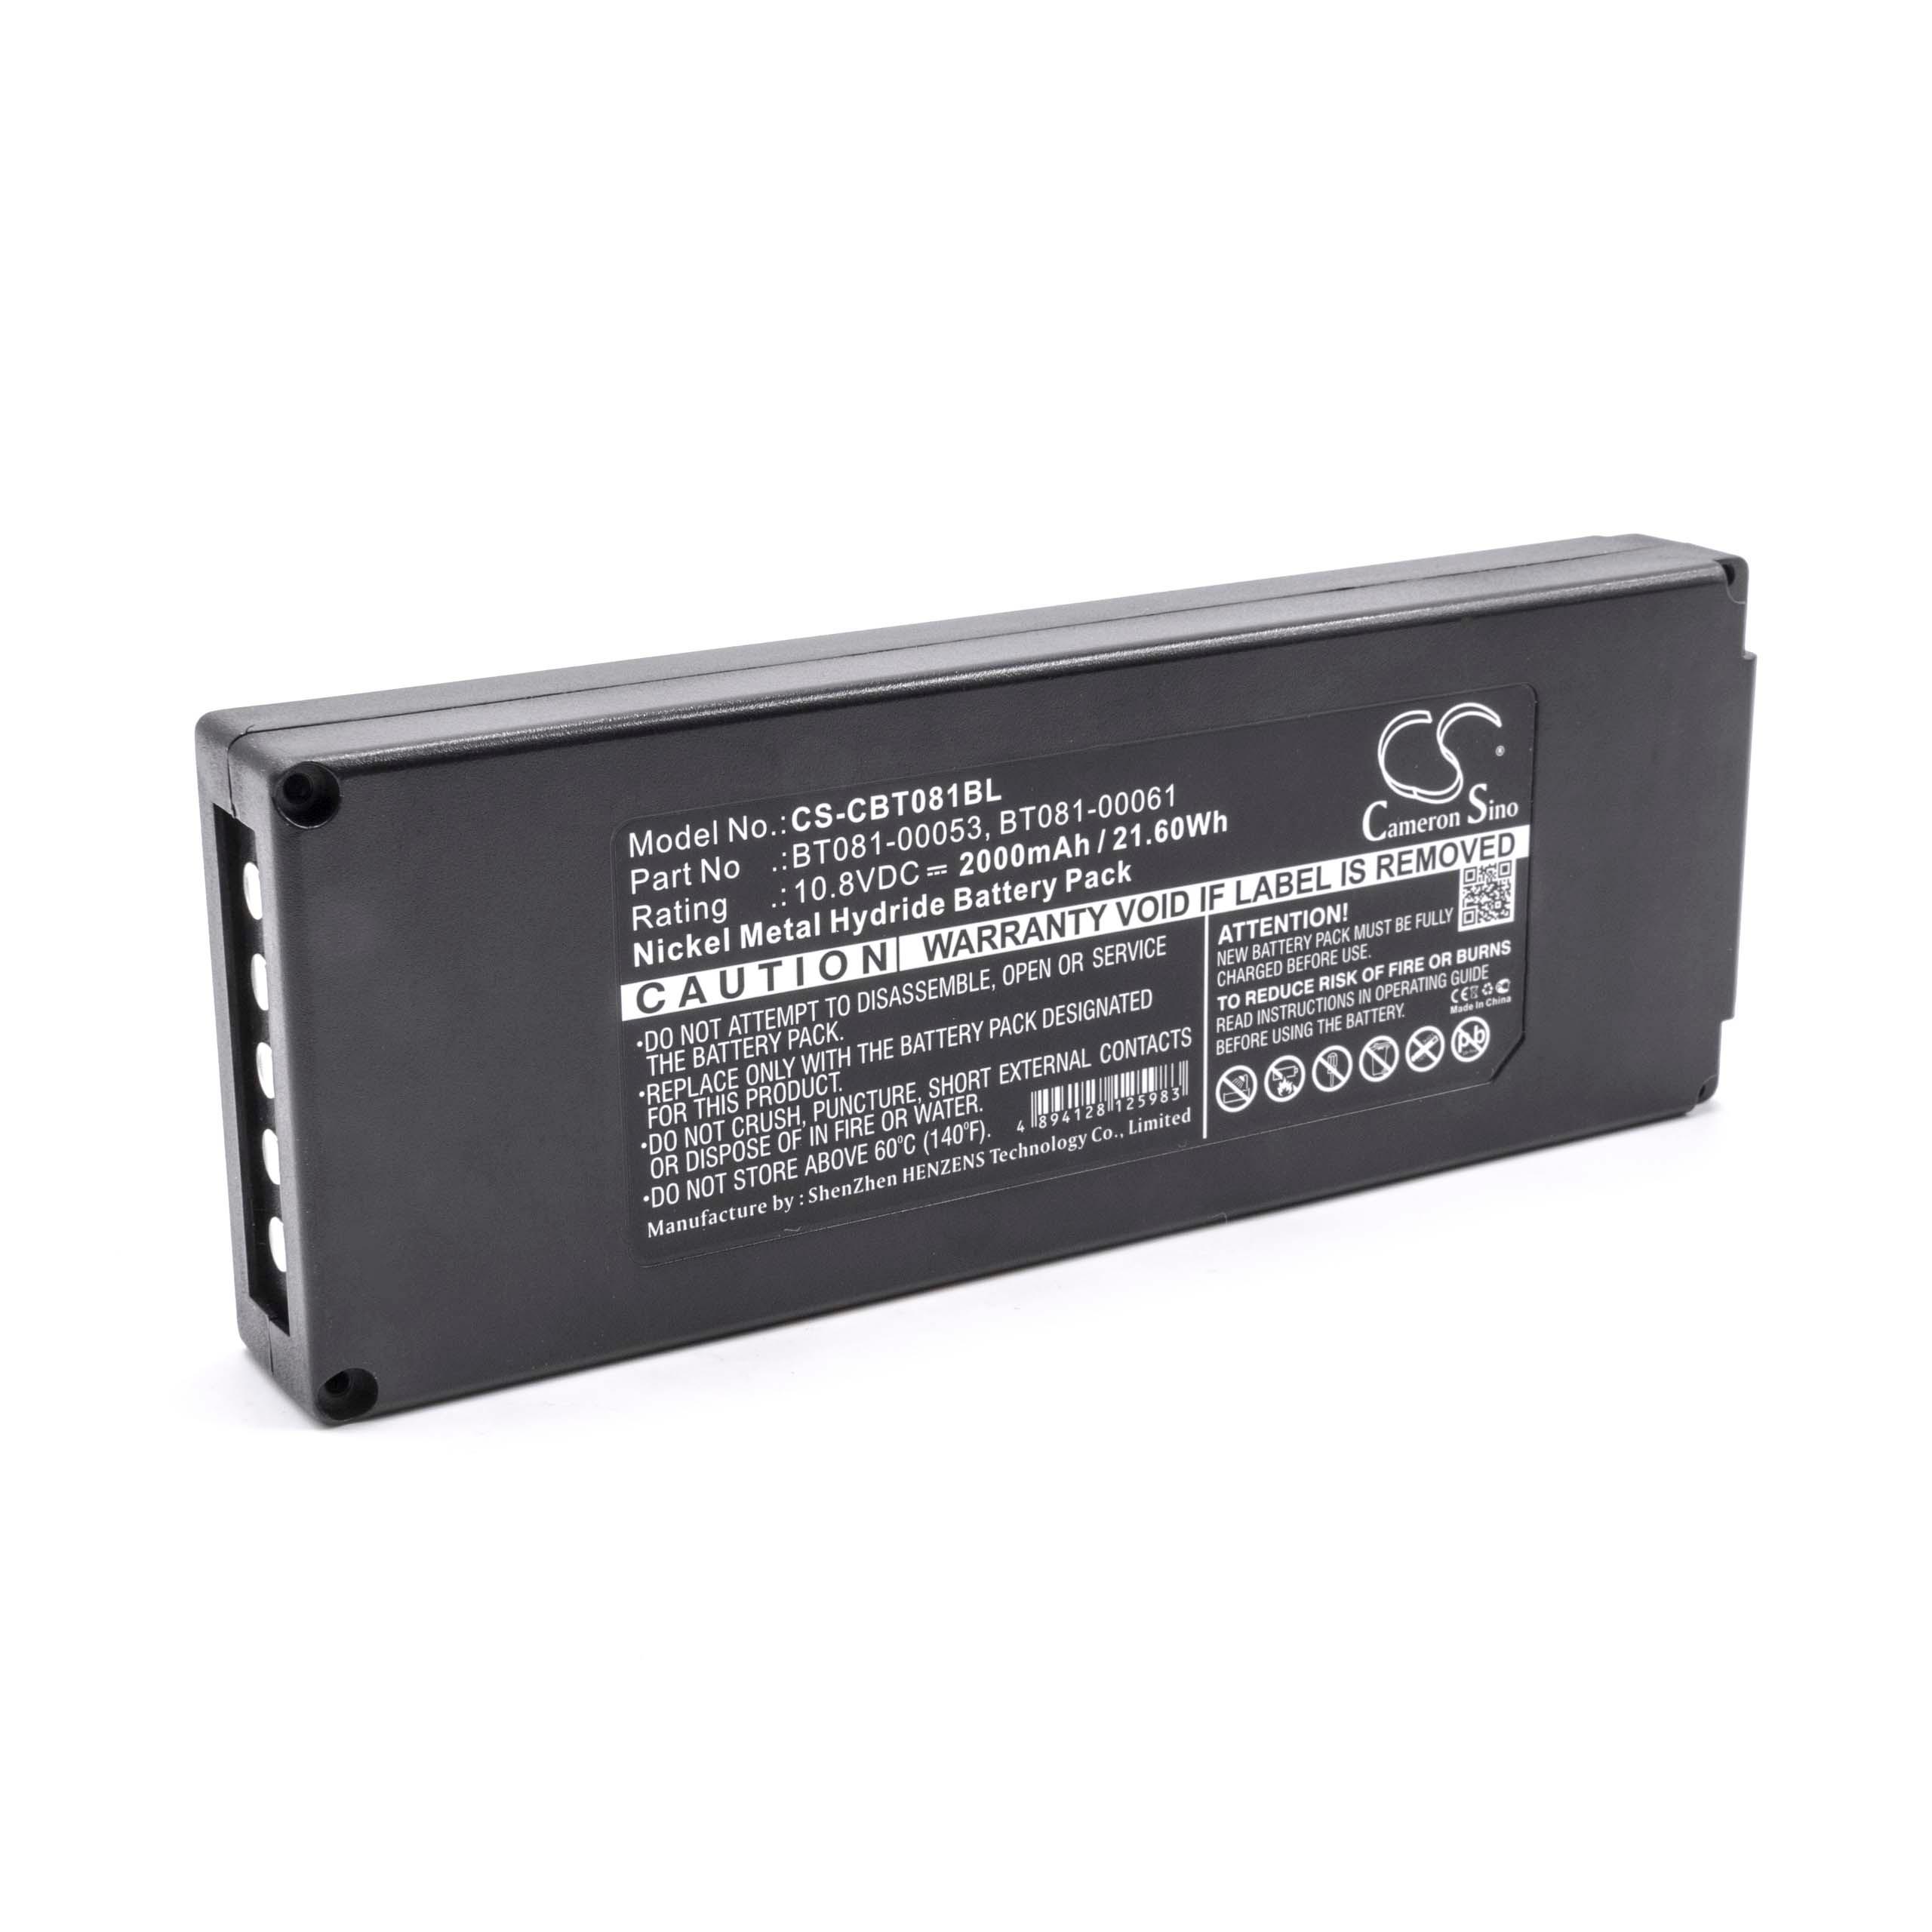 Batería reemplaza Cattron-Theimeg B5018-00061 para mando a distancia Cattron-Theimeg - 2000 mAh 10,8 V NiMH